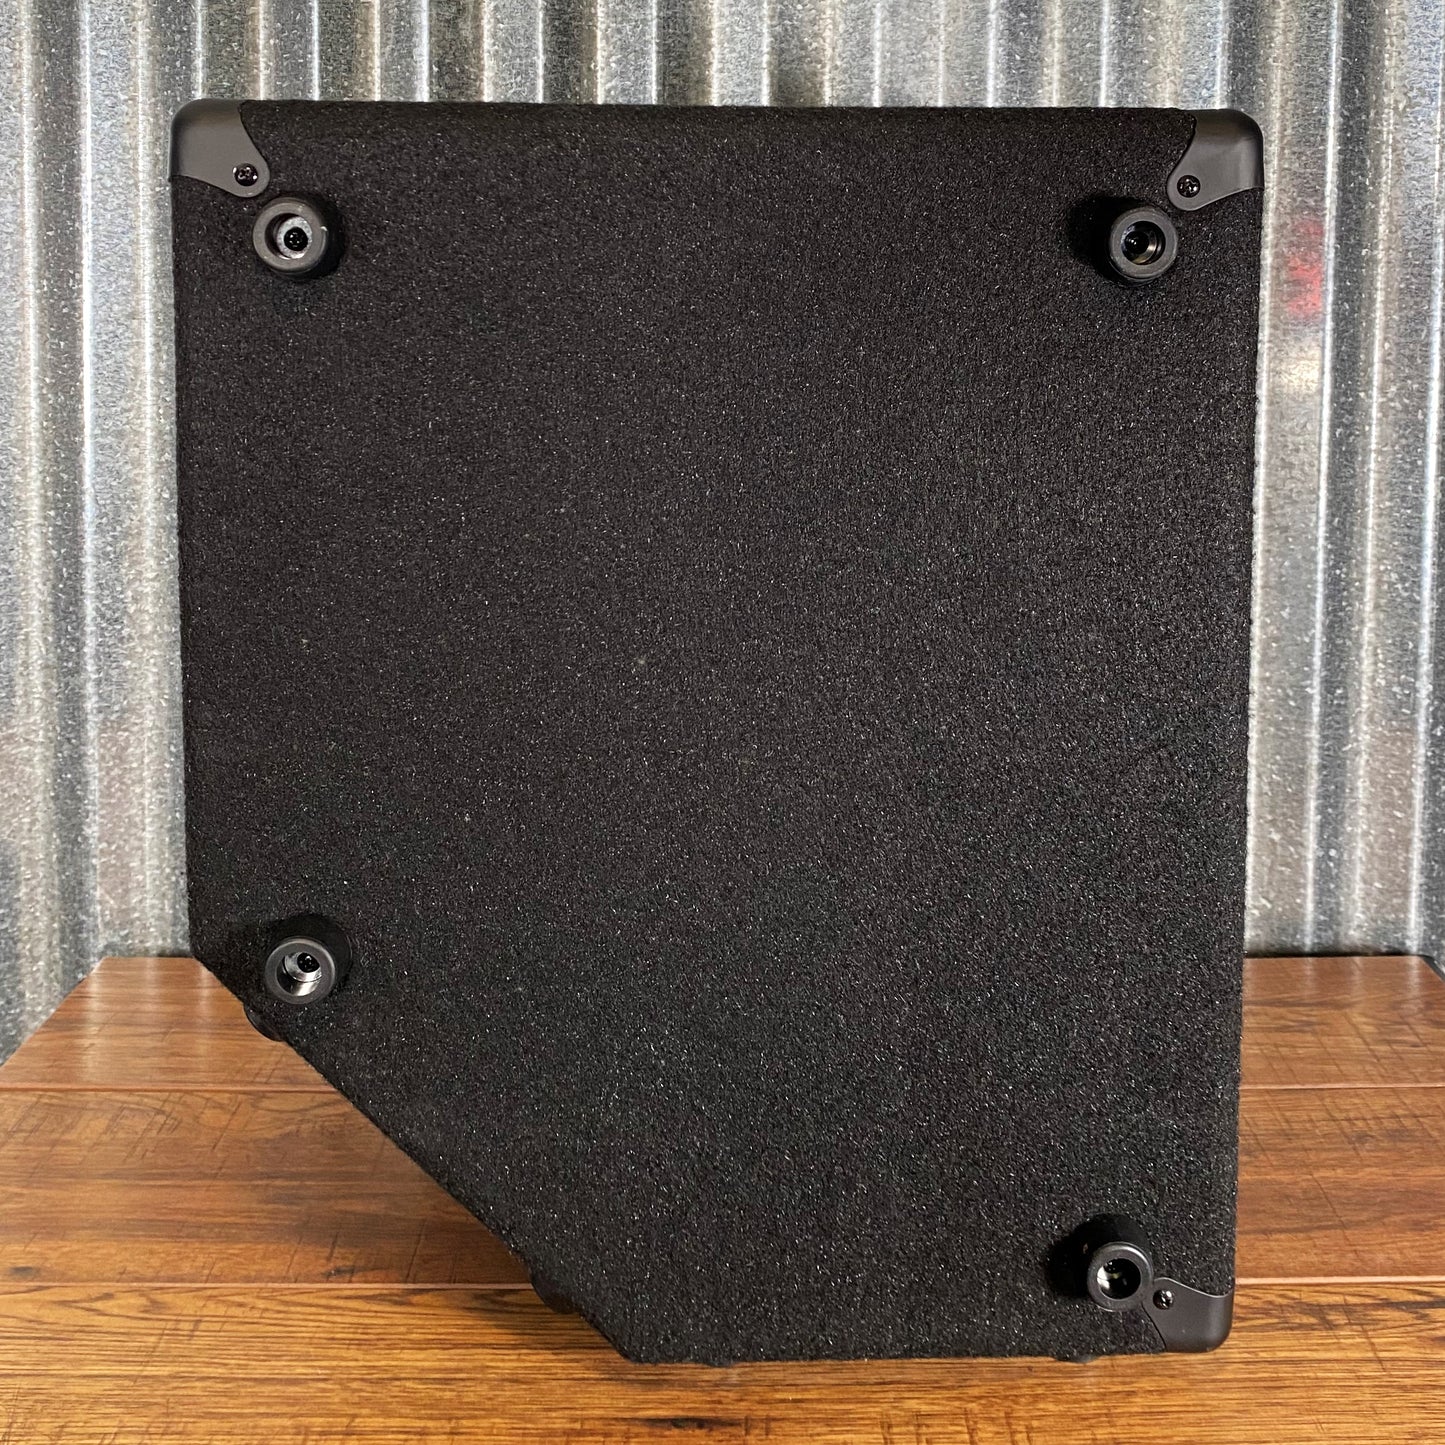 Ashdown ORIGINAL C112T-300 Watt 12" Kickback Bass Combo Amplifier